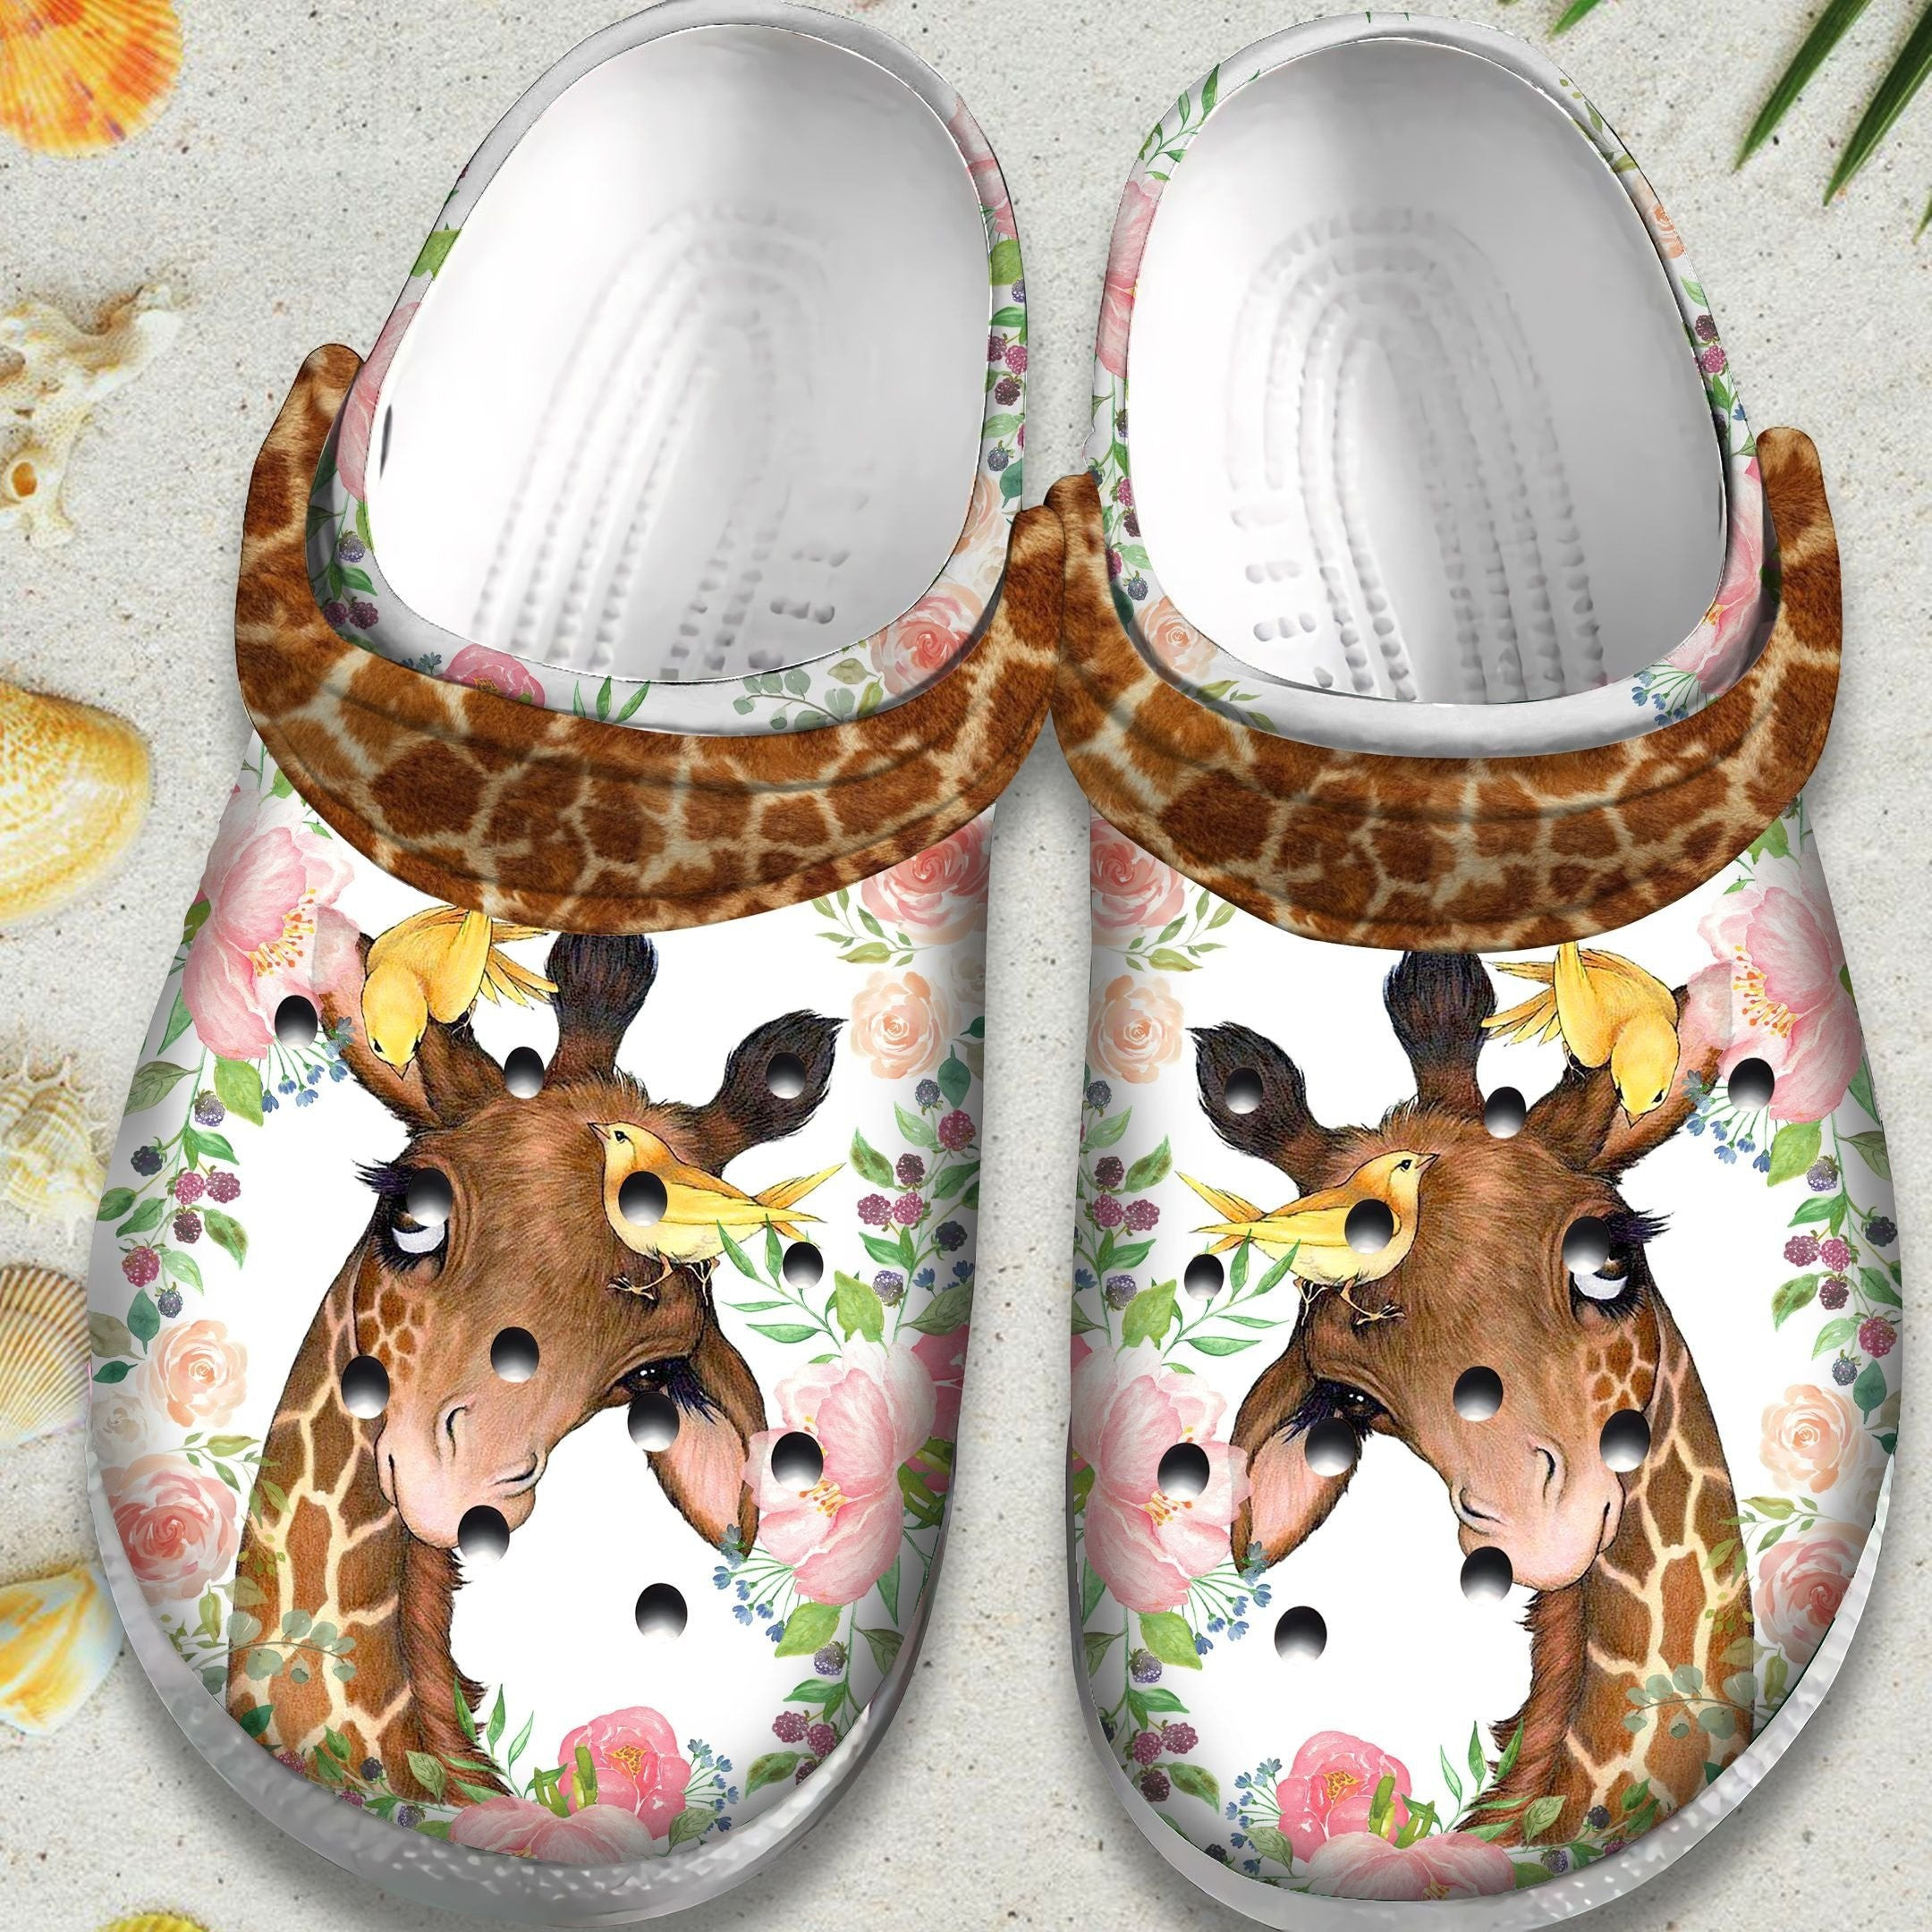 Flower Giraffe With Bird Shoes - Cute Animal Crocs Shoes Clogs Birthday Gift For Boy Girl